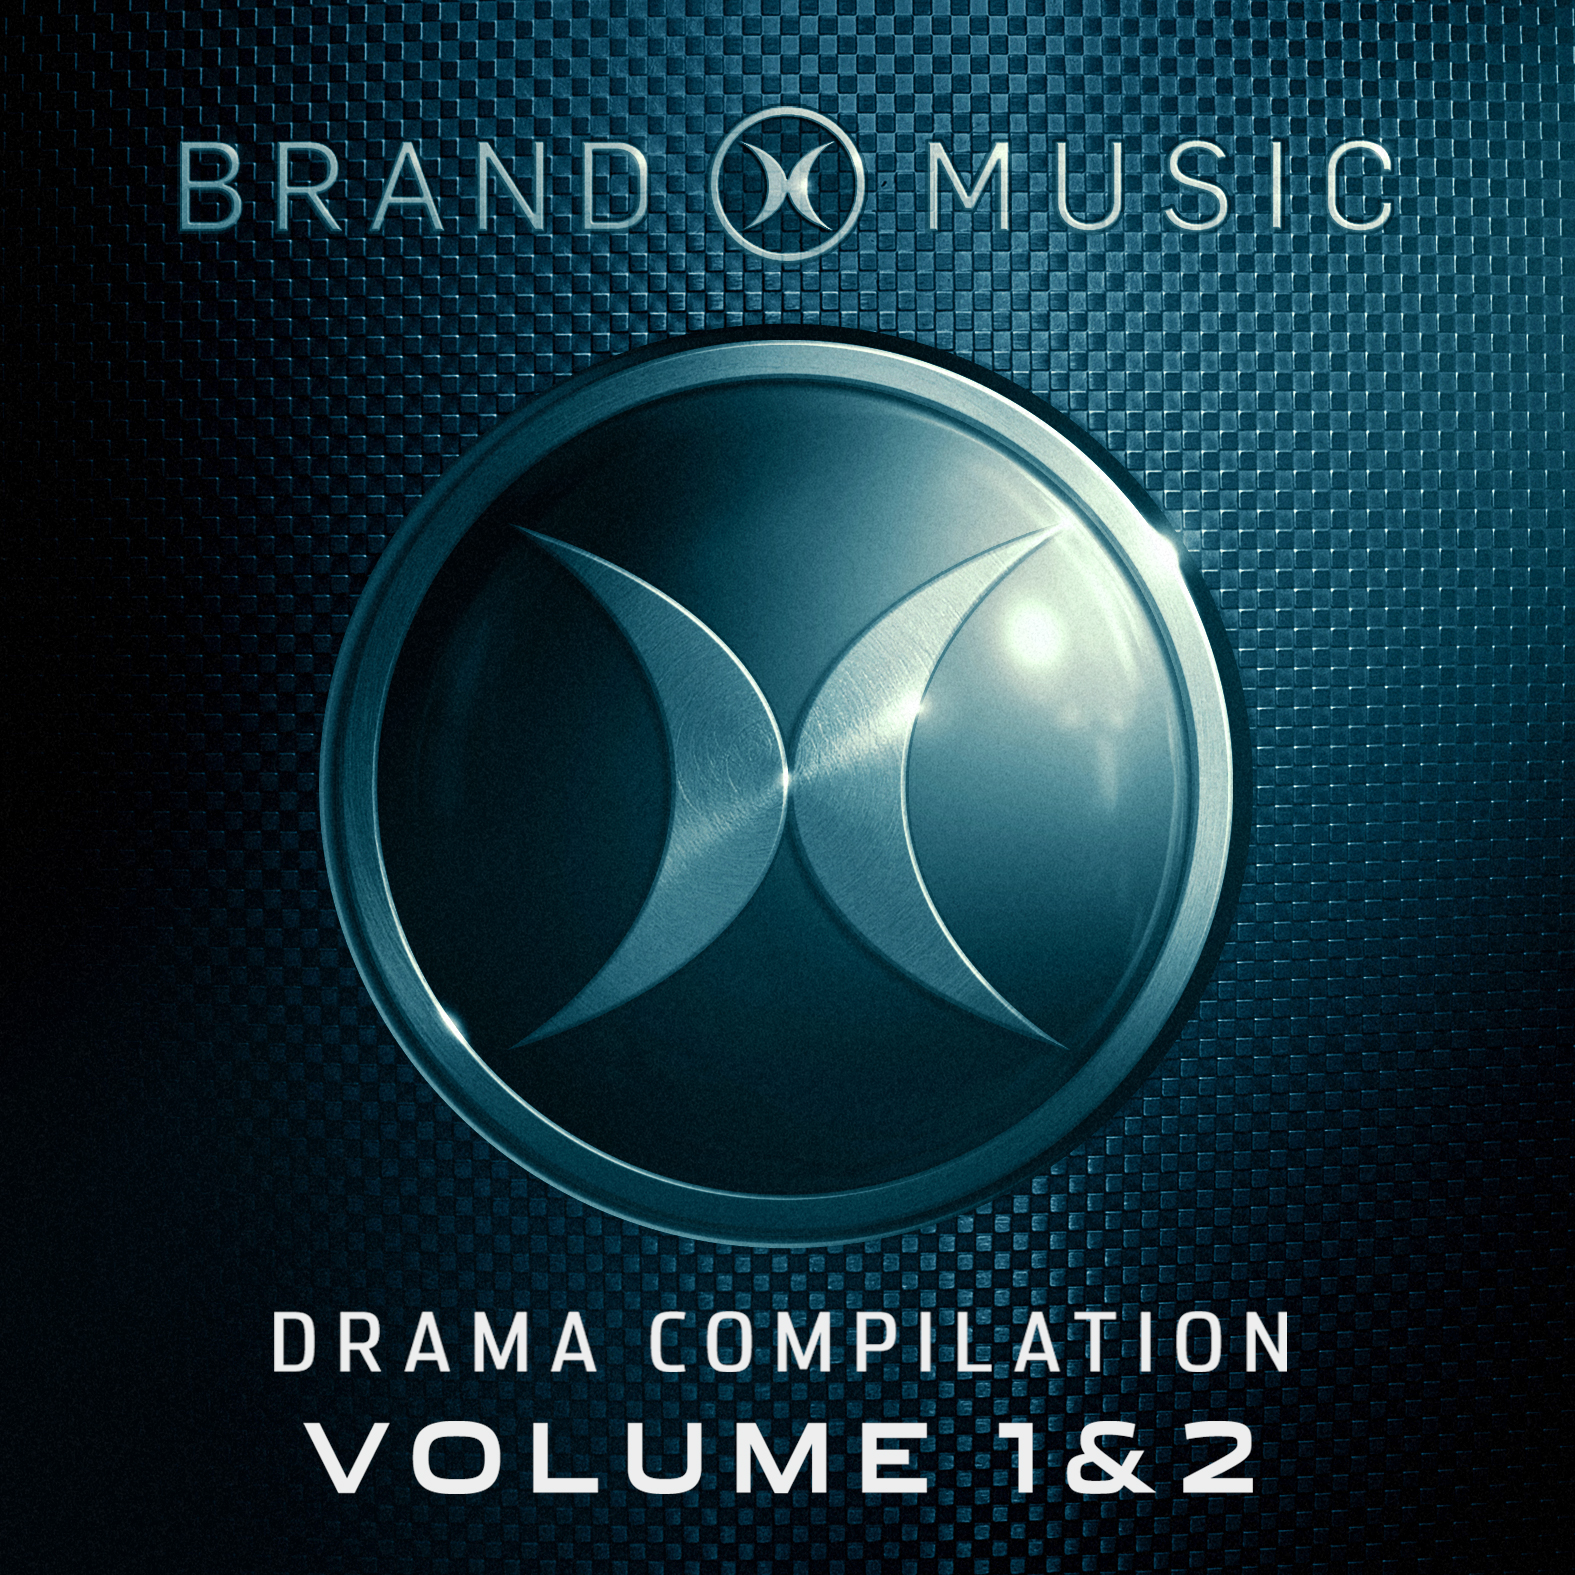 Drama Volume 1 & 2